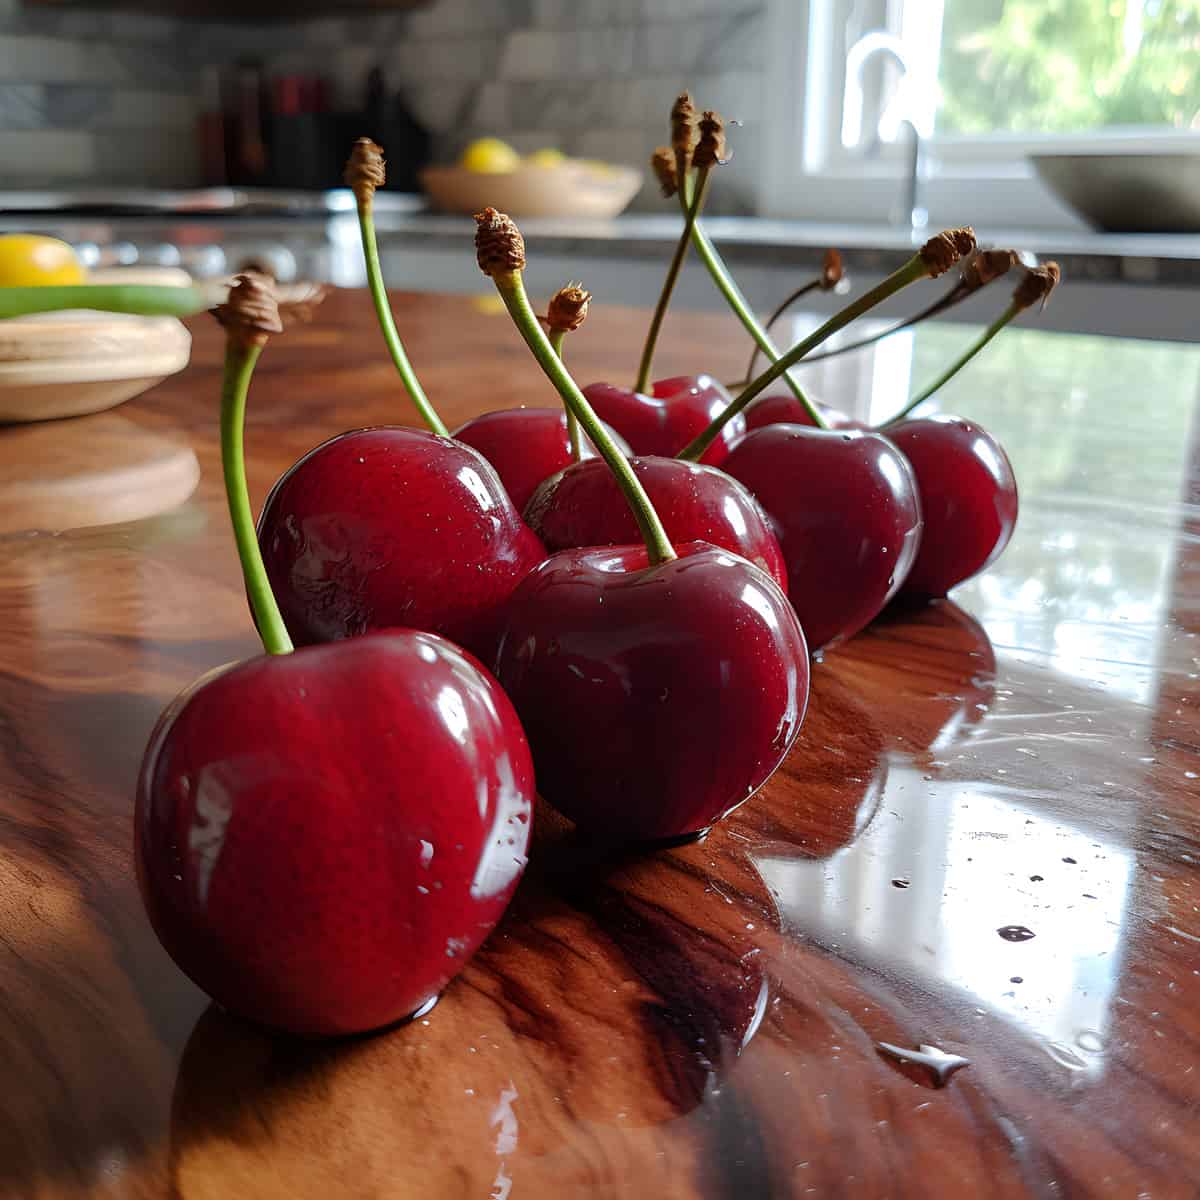 Tianshan Cherries on a kitchen counter